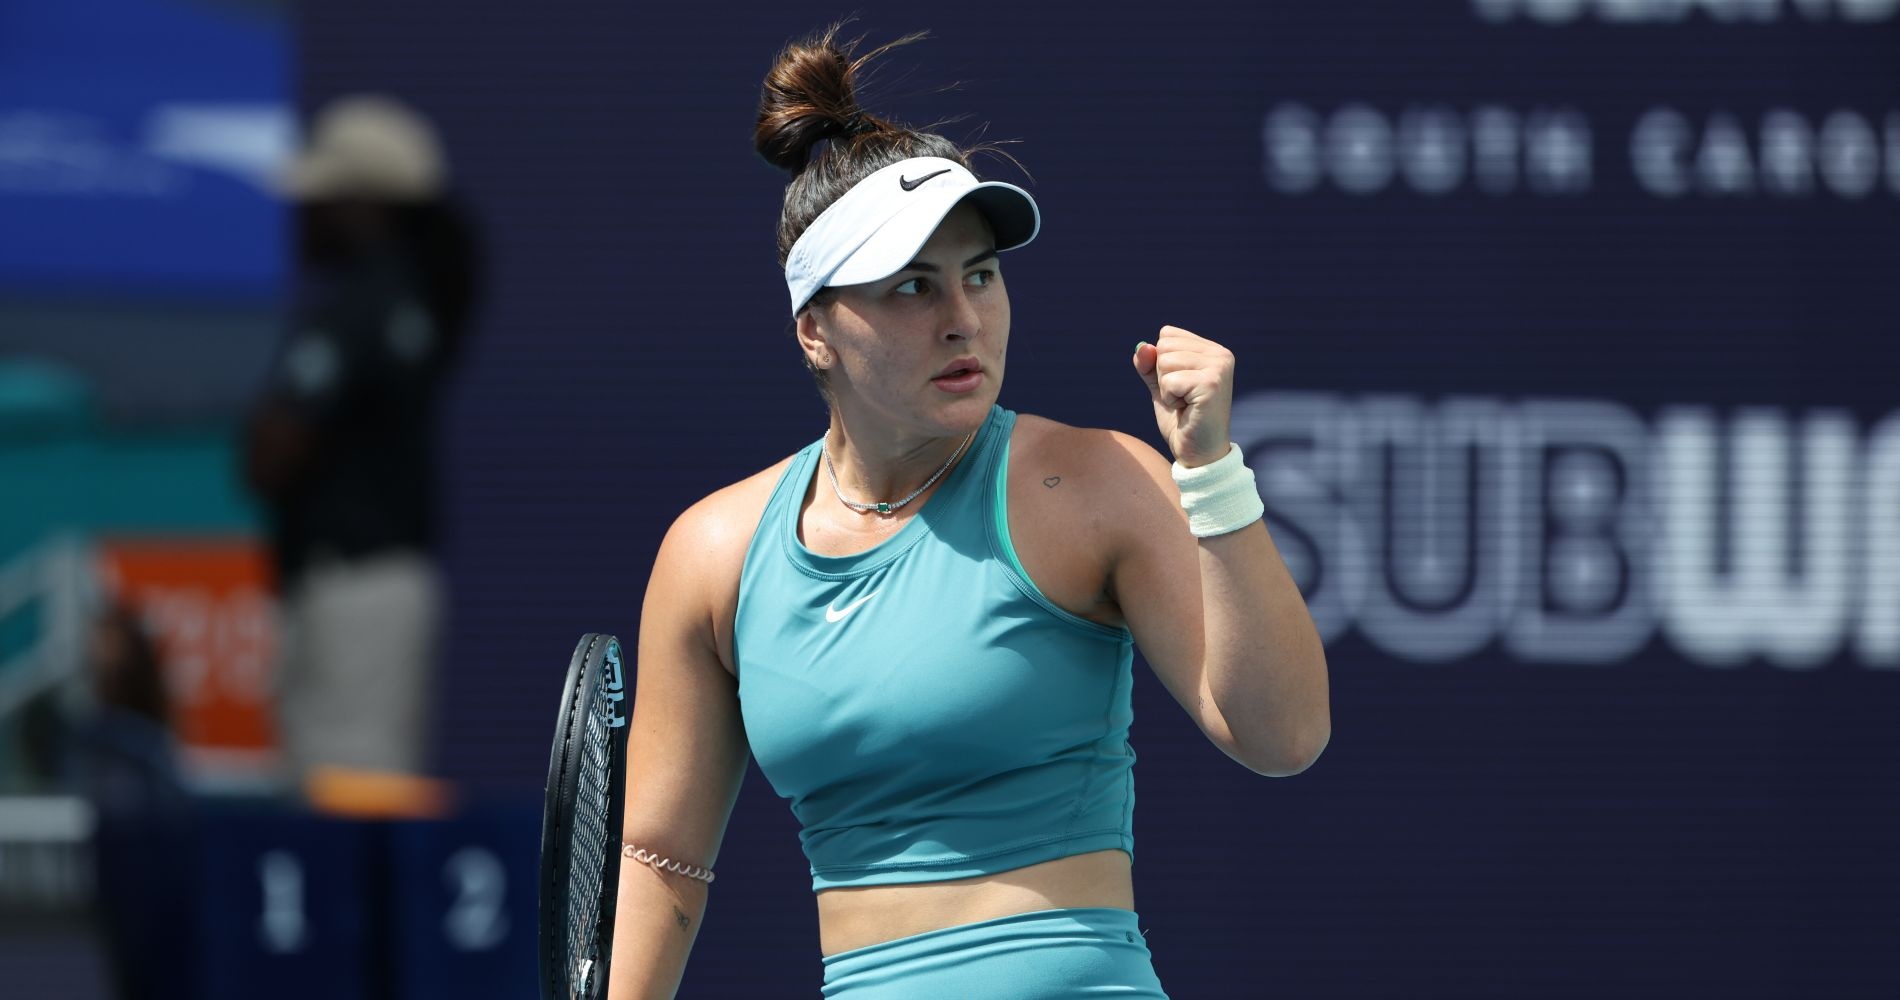 Tennis, WTA Miami Open 2023 Andreescu downs Sakkari Tennis Majors